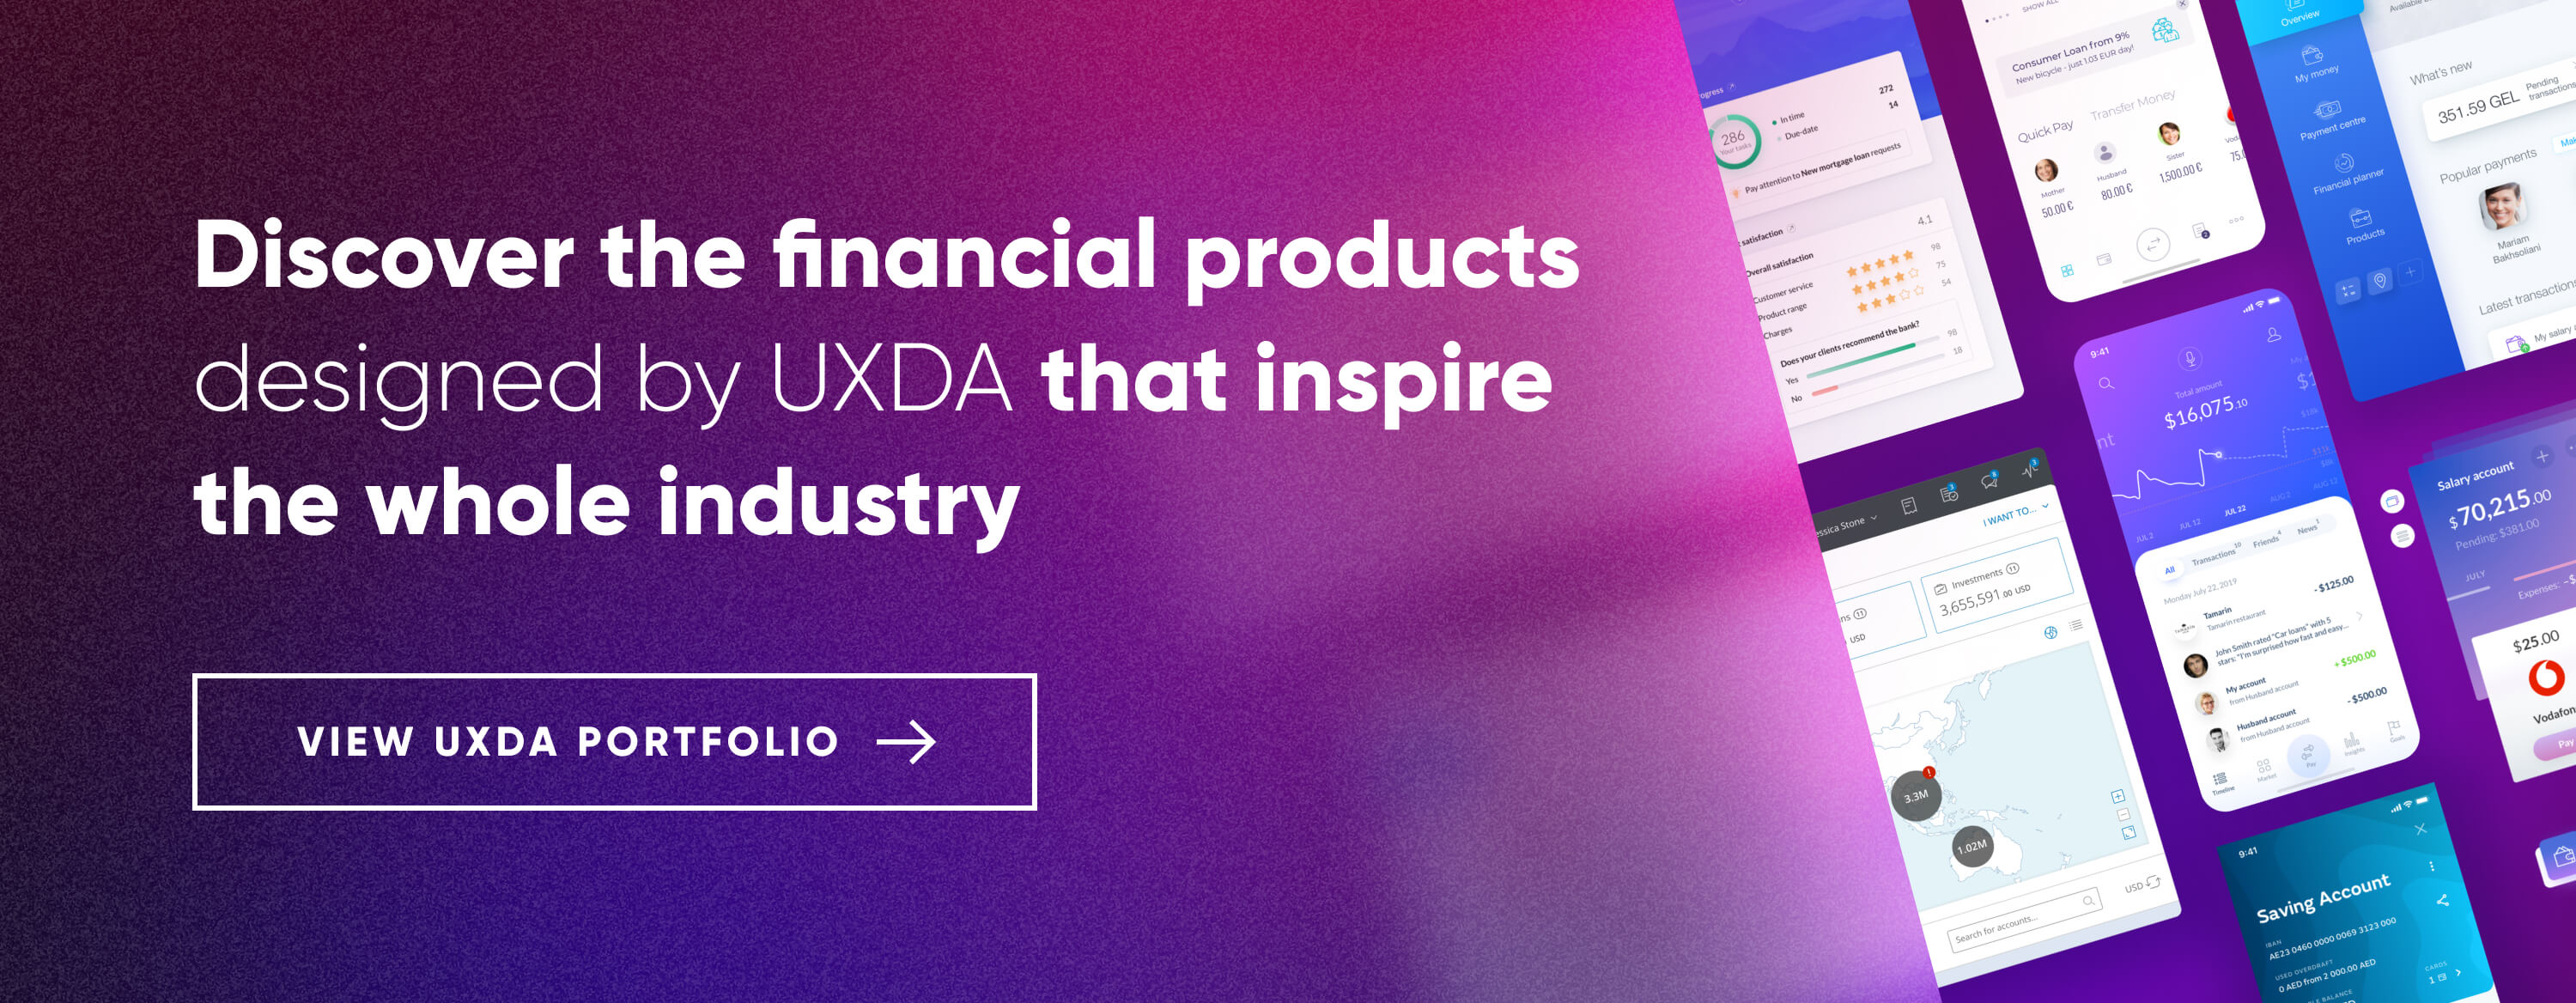 uxda-portfolio-financial-digital-product-inspire-industry-ux-1667398520.jpg